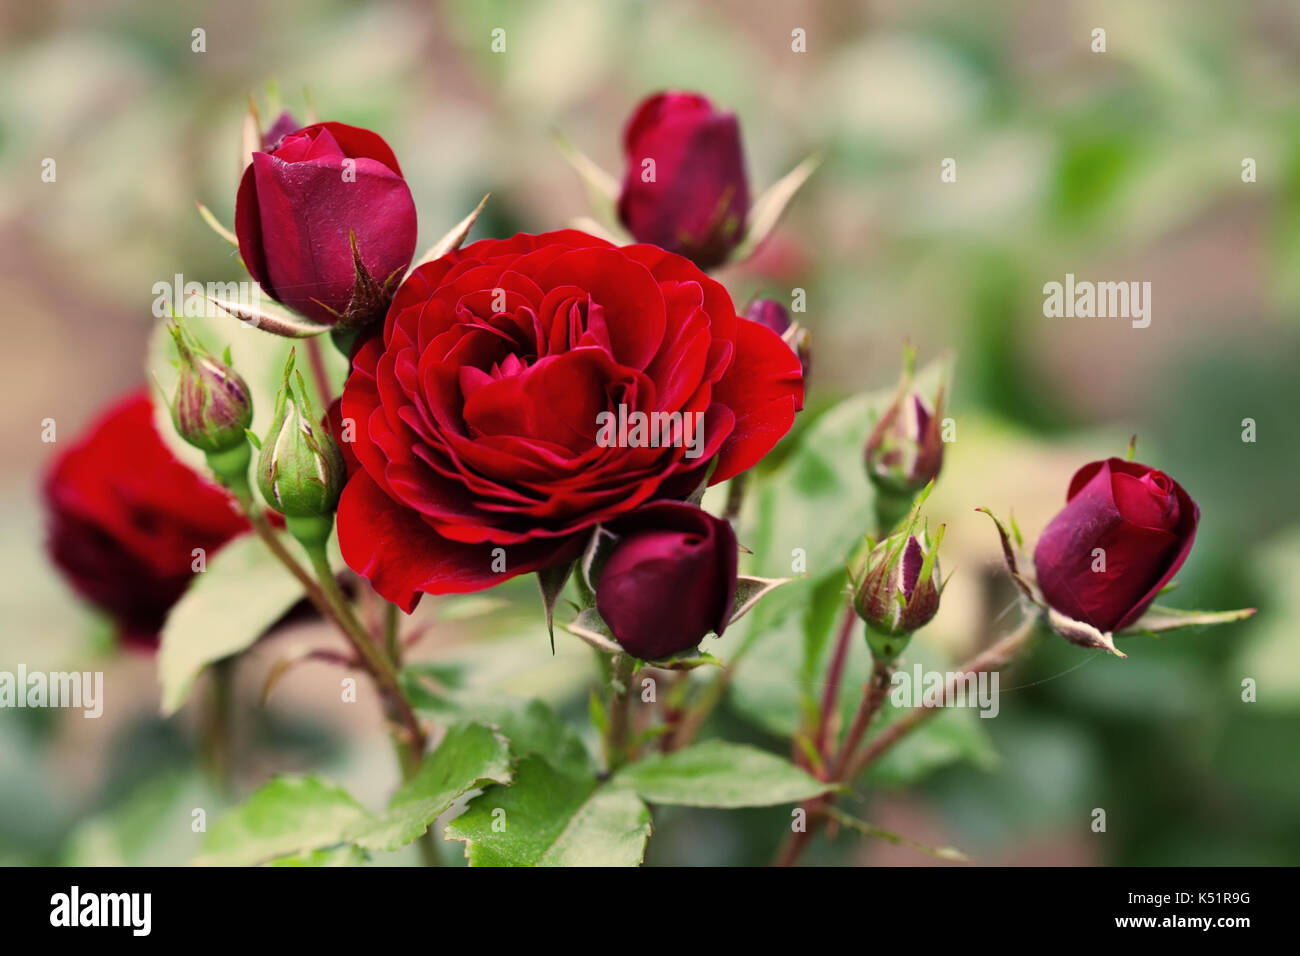 Blühende maroon Rosen Landschaft. Sommer Garten Blumen Szene. Weiches bokeh  Foto Stockfotografie - Alamy